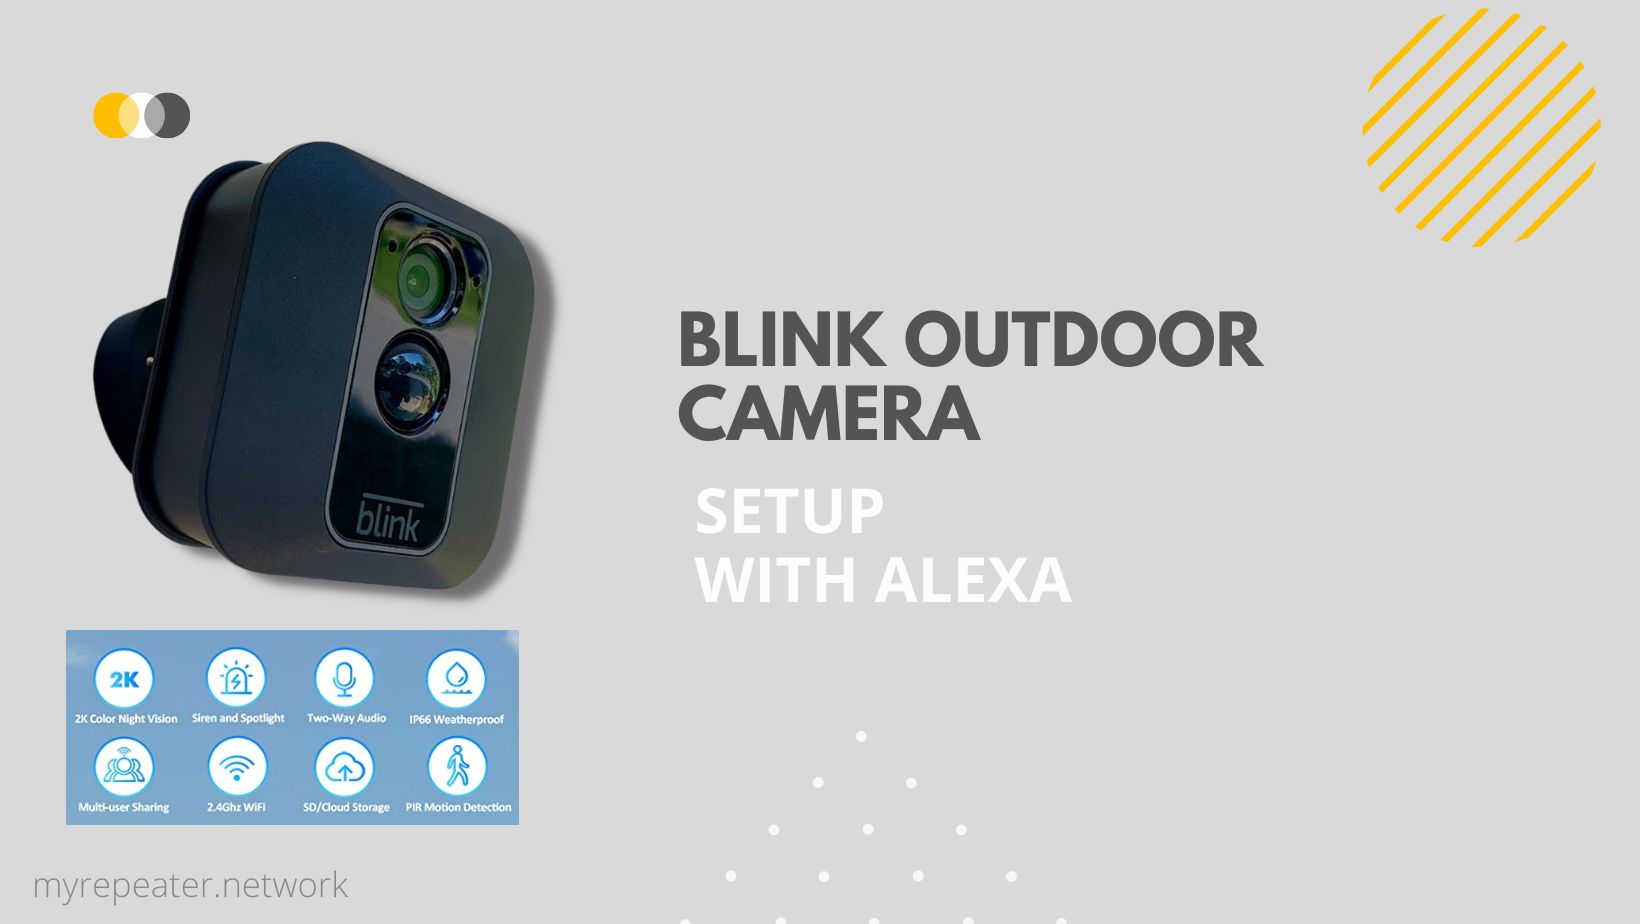 How to setup blink outdoor camera with Alexa